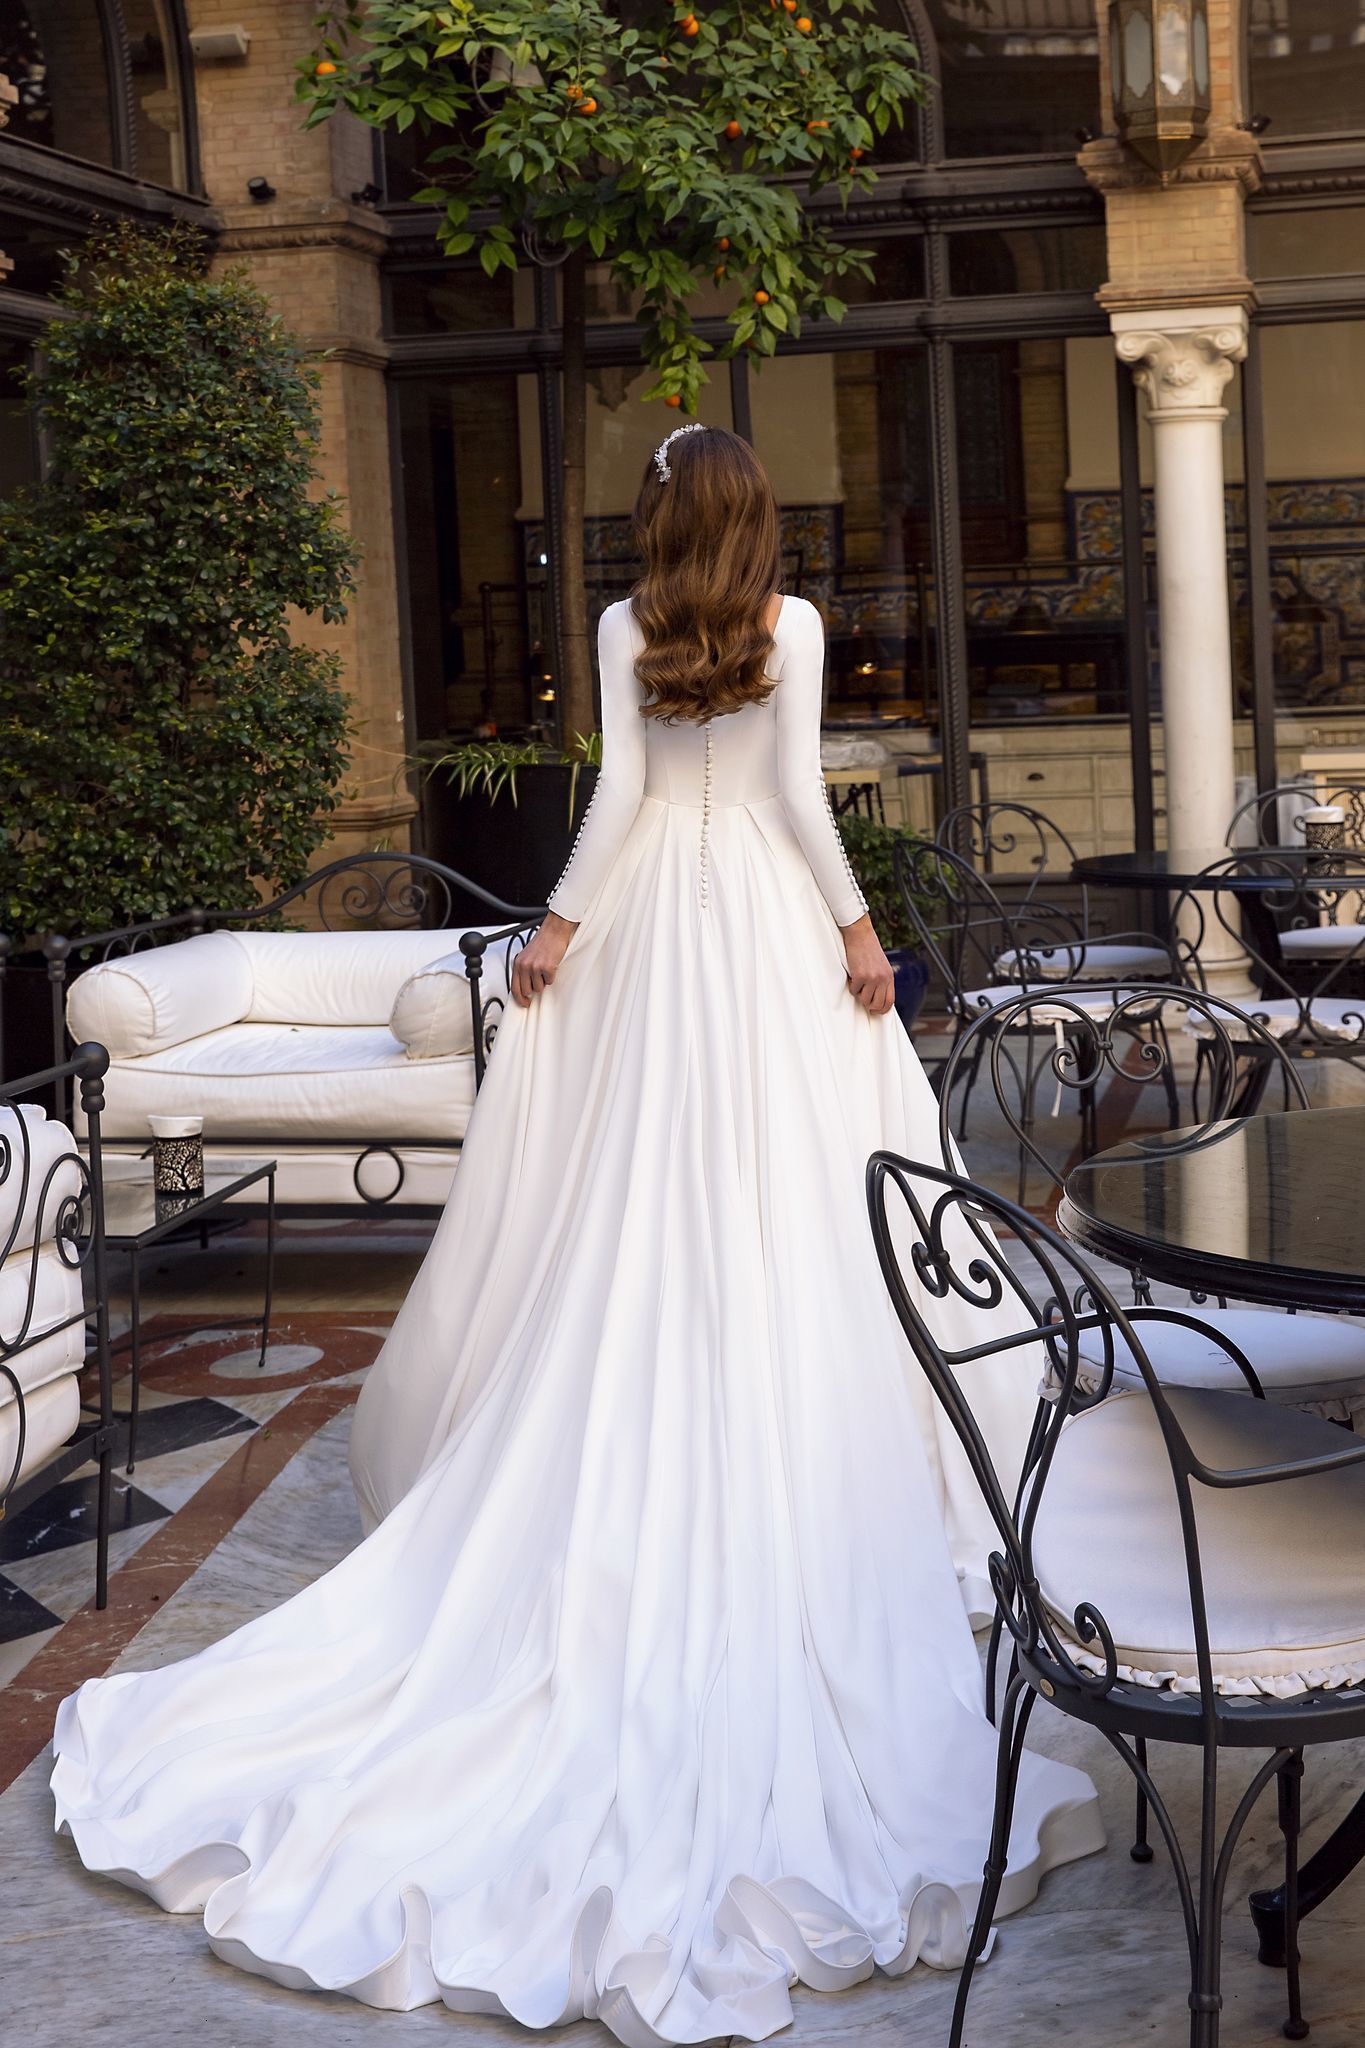 Vintage A-line Wedding Dress 2019 Reflective Dress Button Slit Long Sleeve Court Train Fluffy Simple Bridal Gown - LiveTrendsX